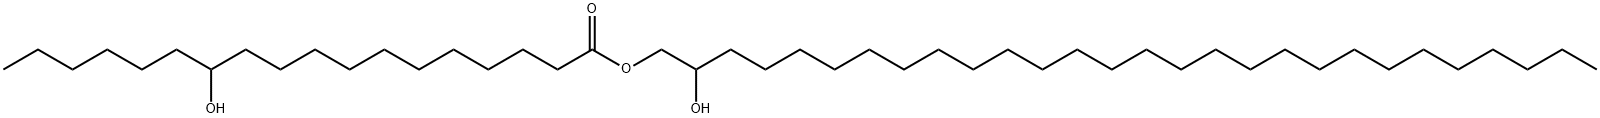 2-hydroxyoctacosyl 12-hydroxyoctadecanoate|羟廿八醇羟基硬脂酸酯